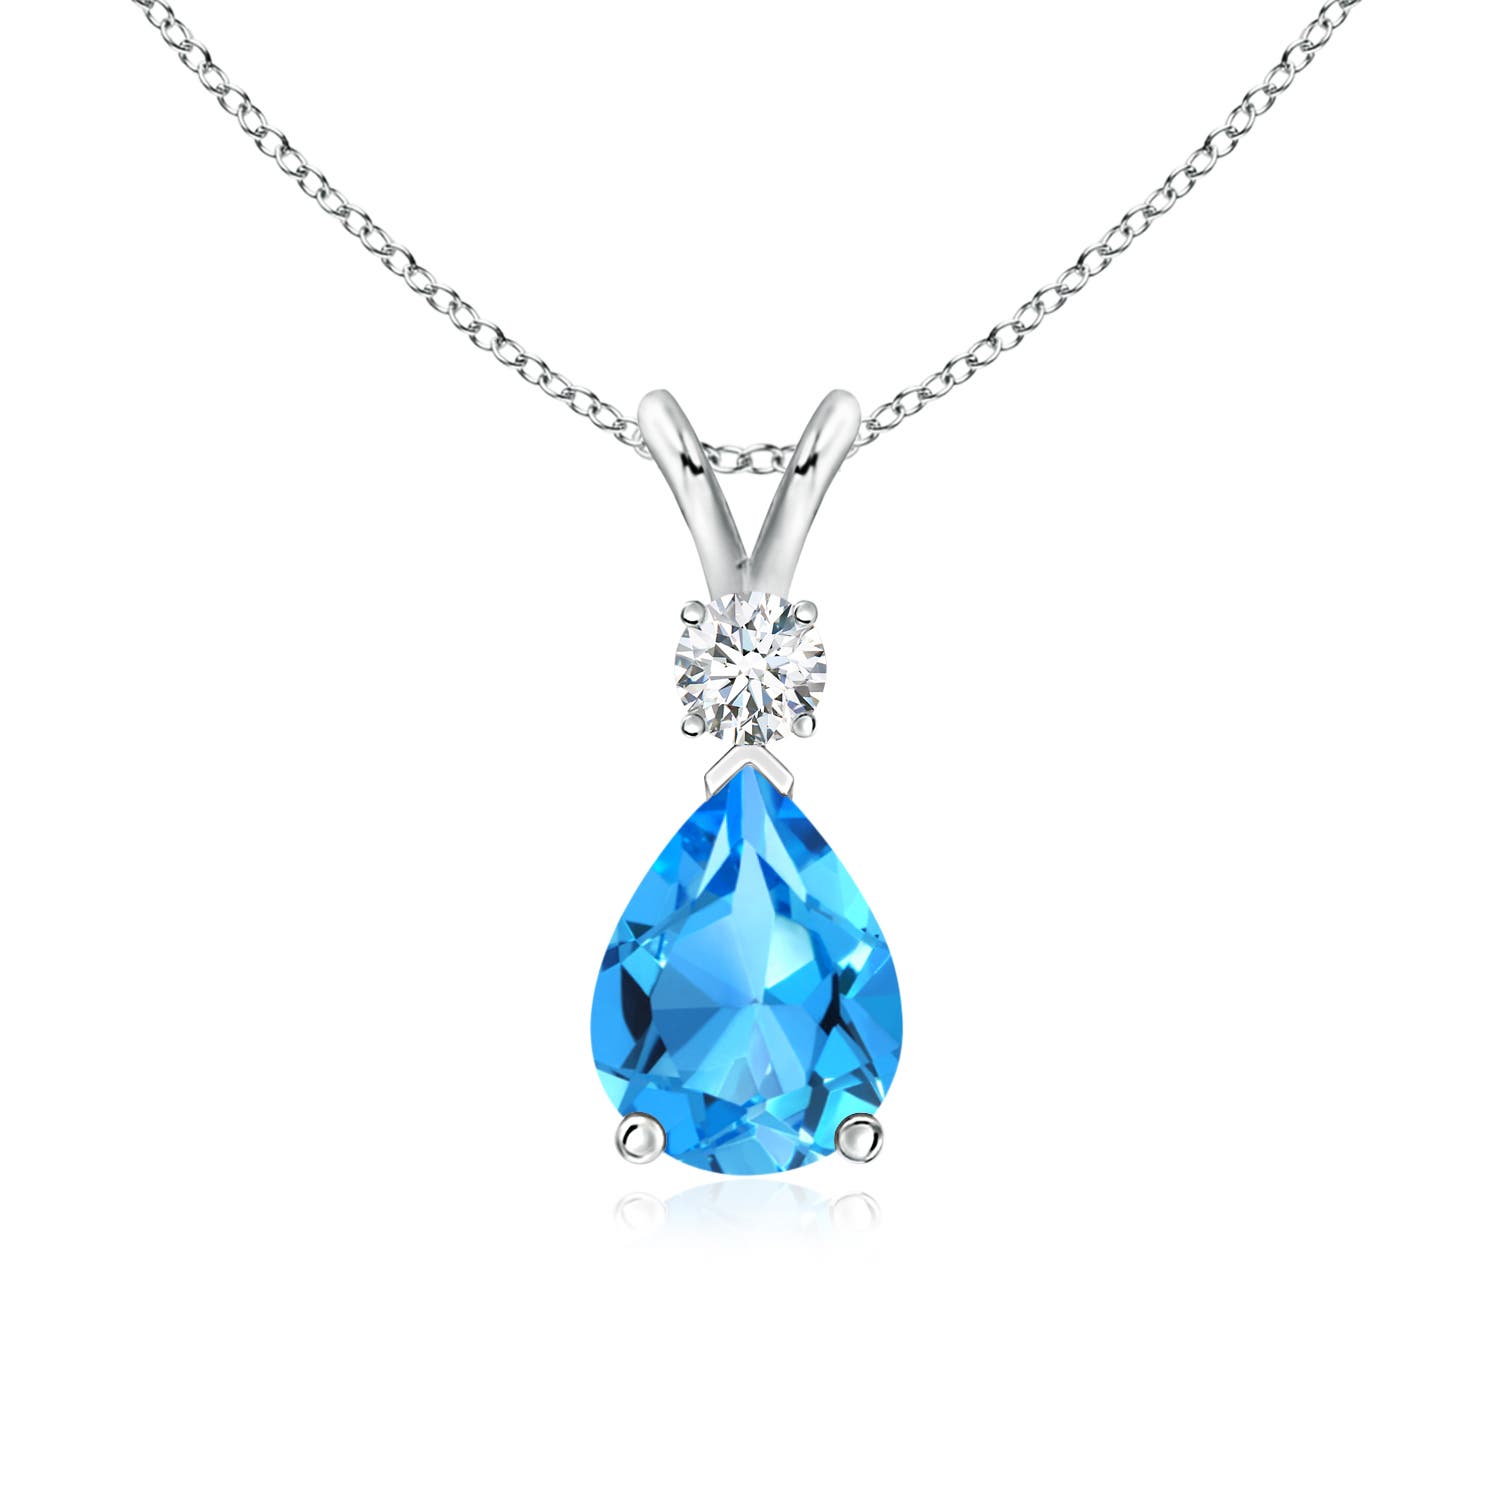 Shop Swiss Blue Topaz Jewelry with Unique Designs | Angara